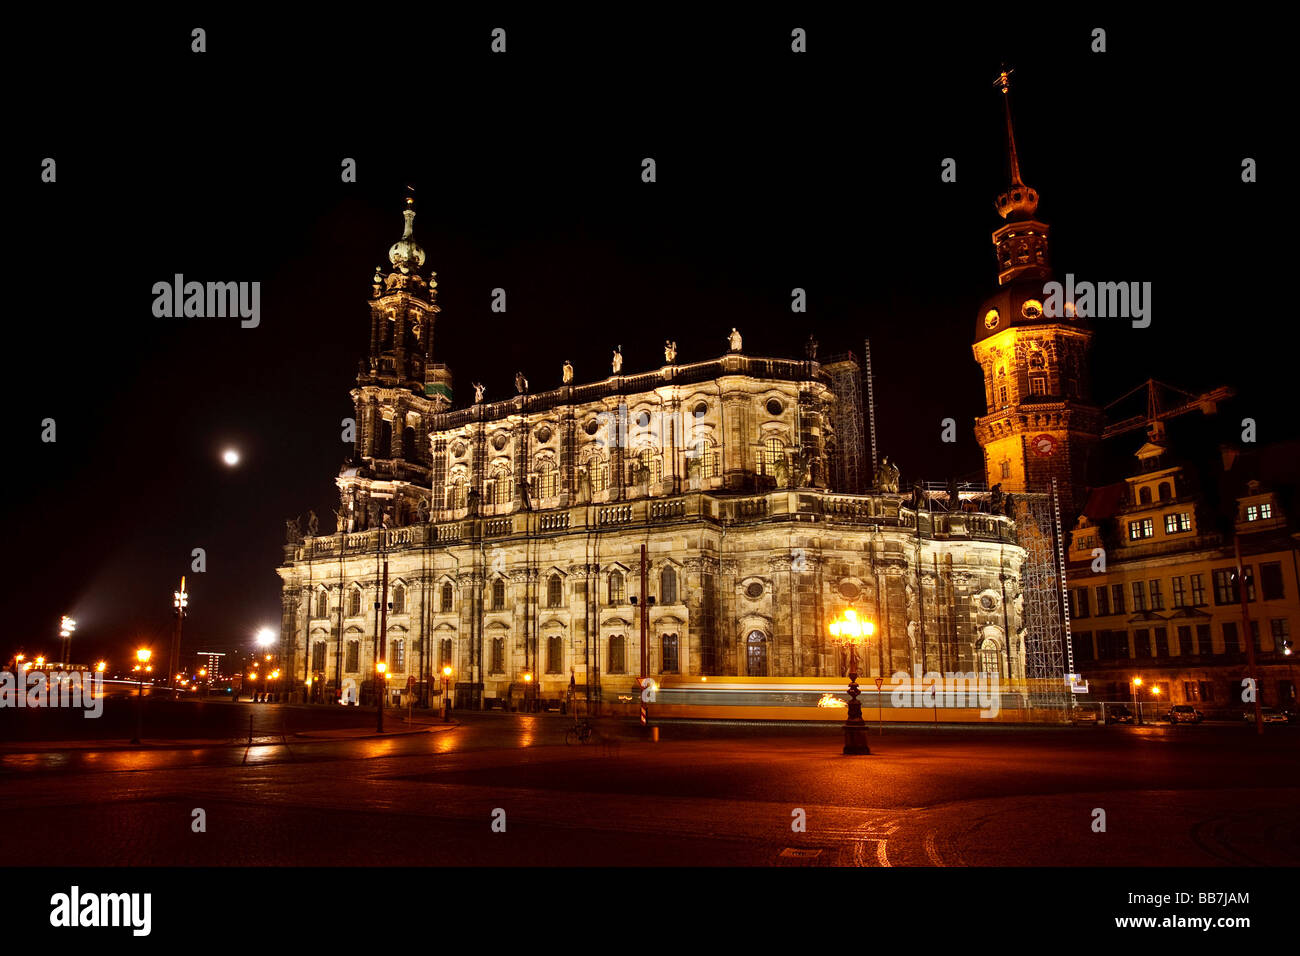 Katholische Hofkirche, Catholic Court Church, at night, Dresden, Saxony, Germany, Europe Stock Photo